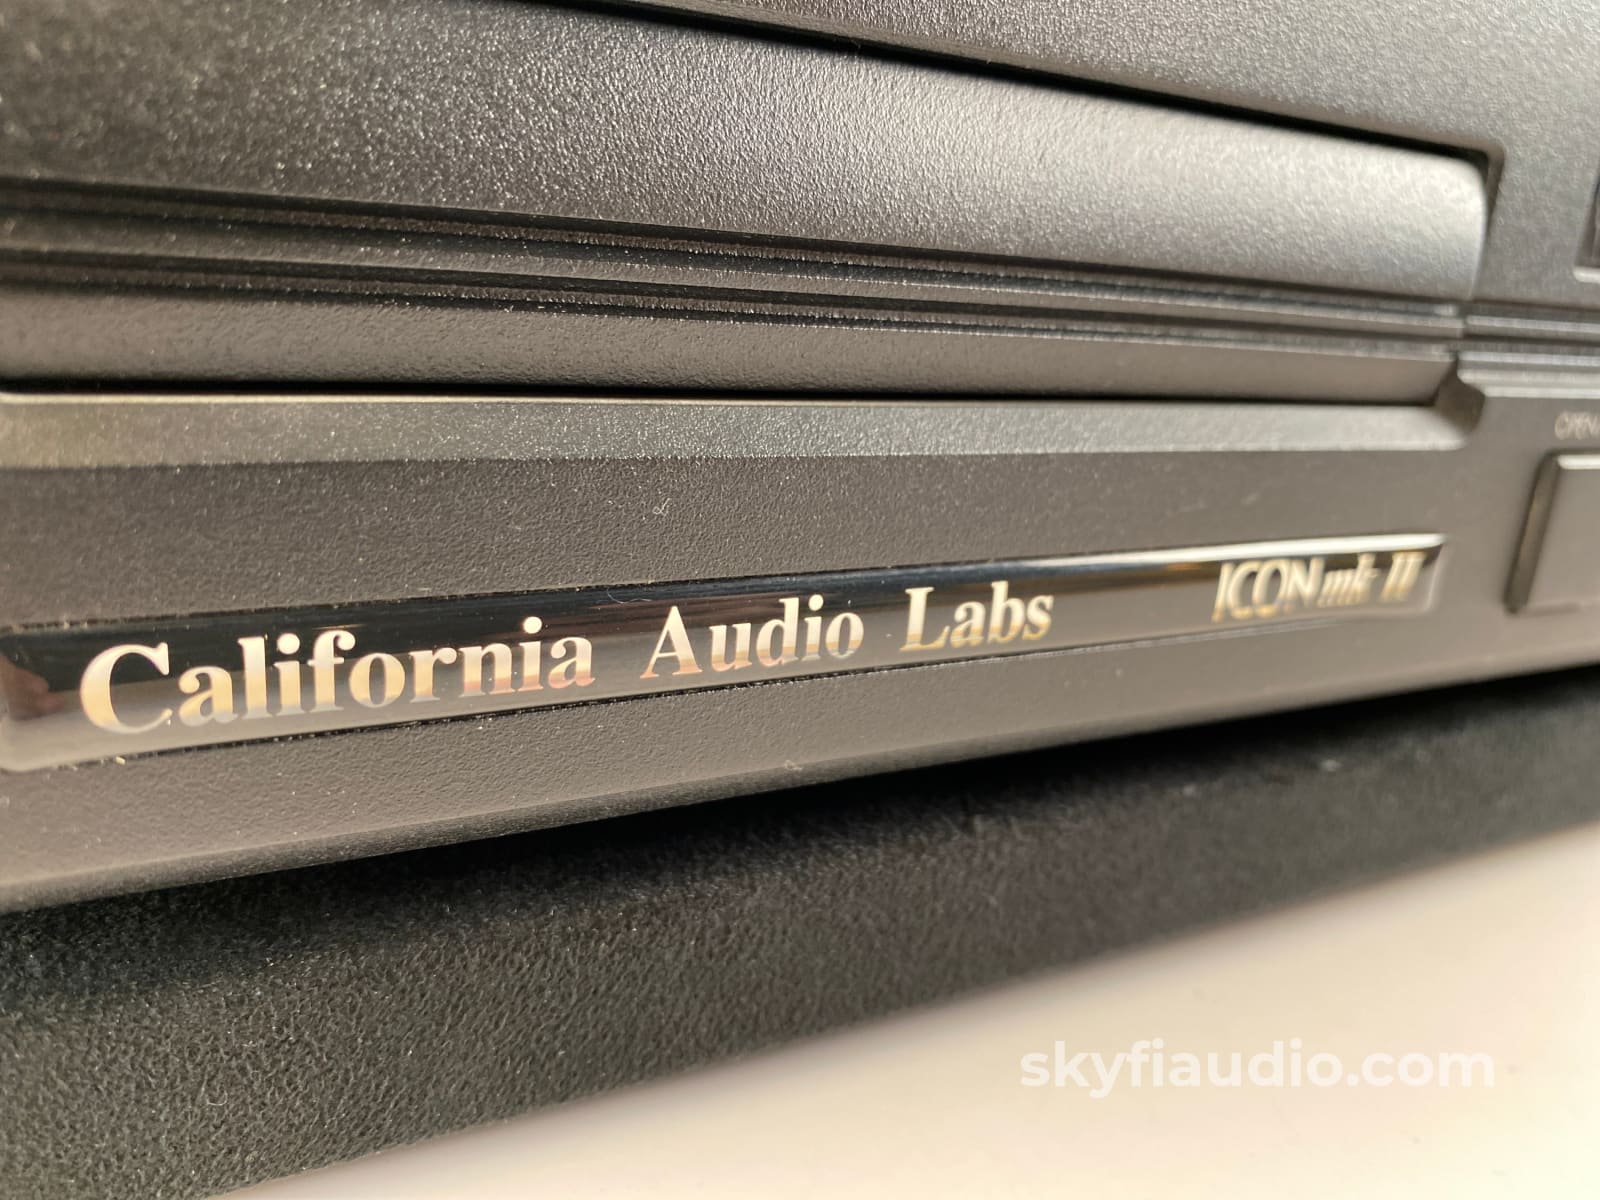 California Audio Labs Icon Mkii Cd Player + Digital